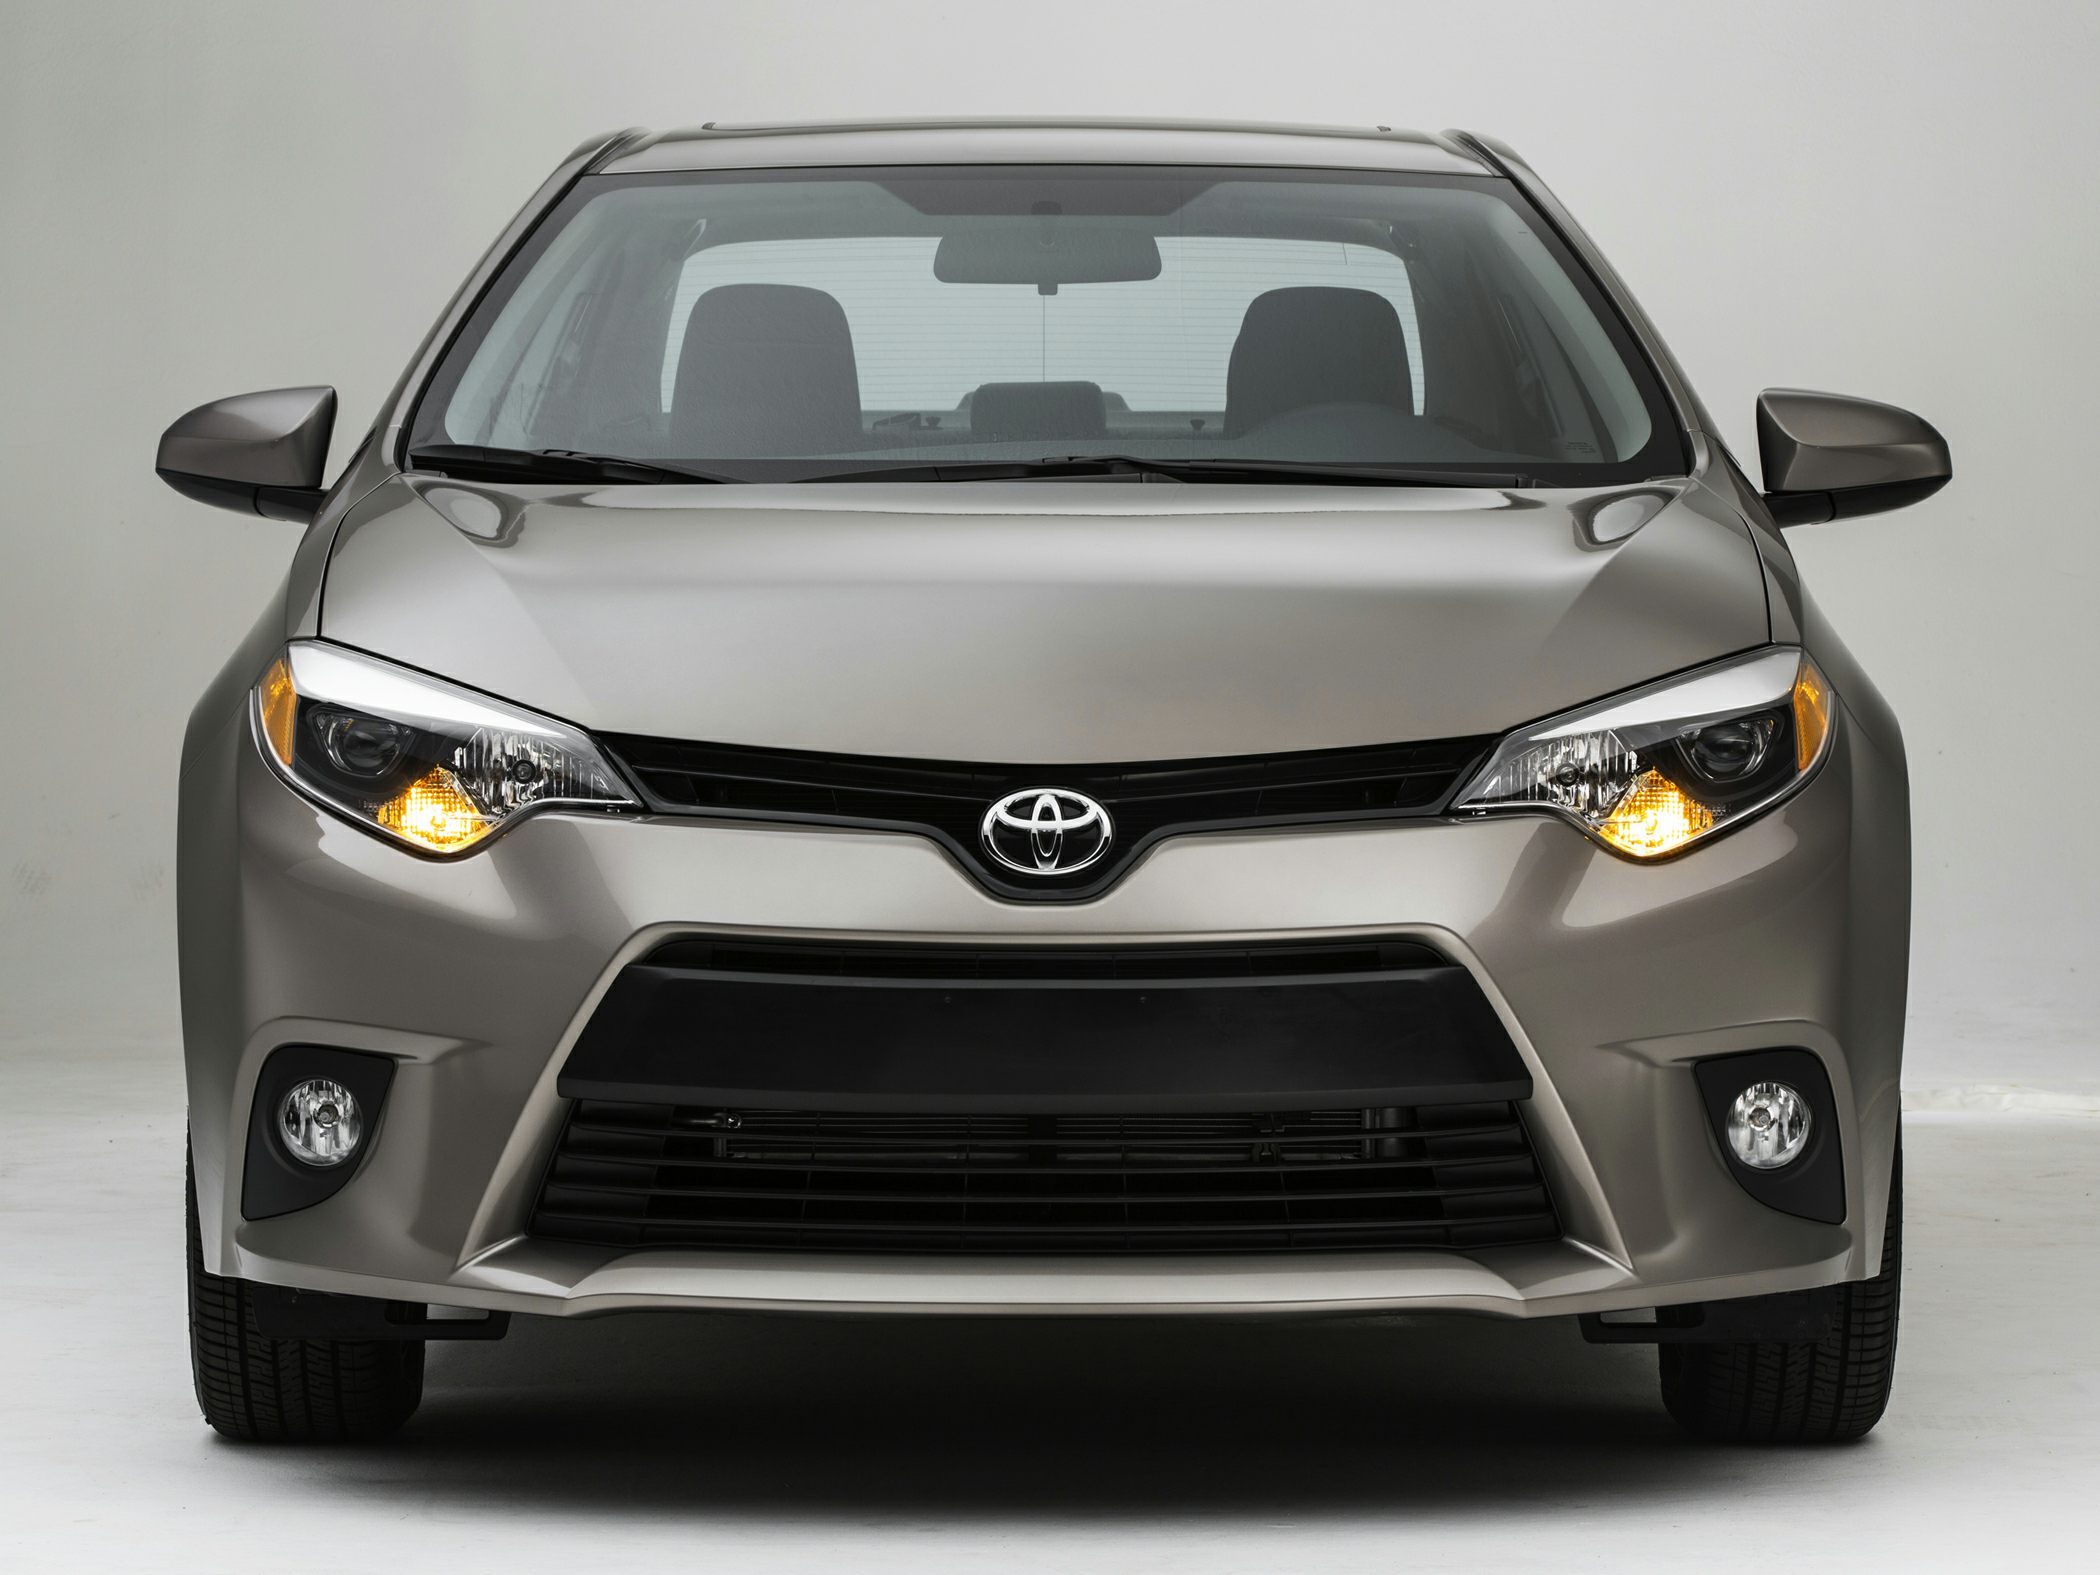 2015-Toyota-Corolla-Sedan-L-4dr-Sedan-Exterior-1.png